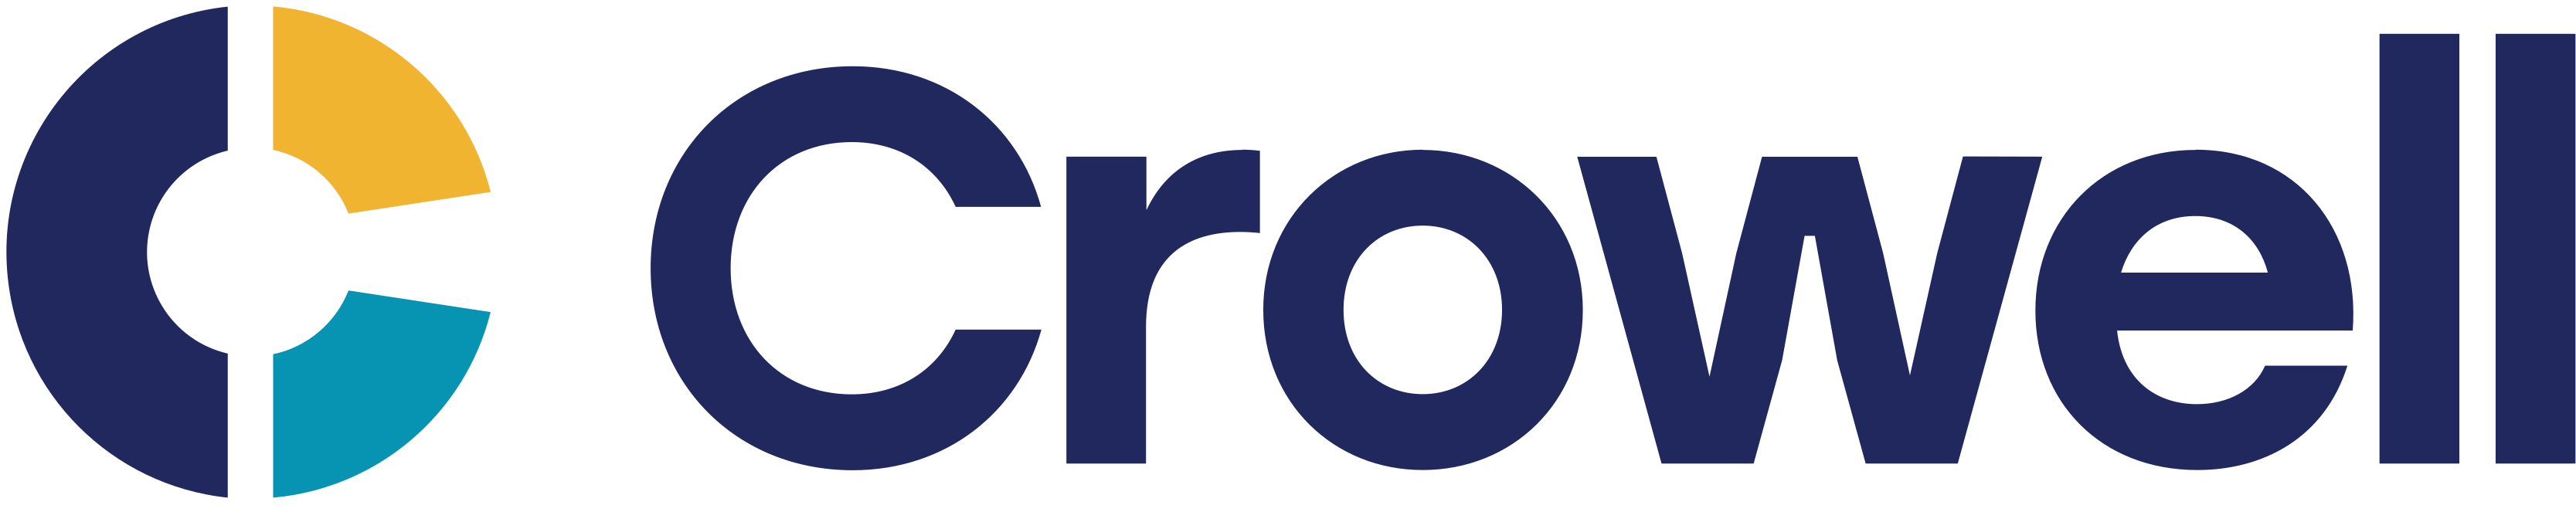 Crowell Logo